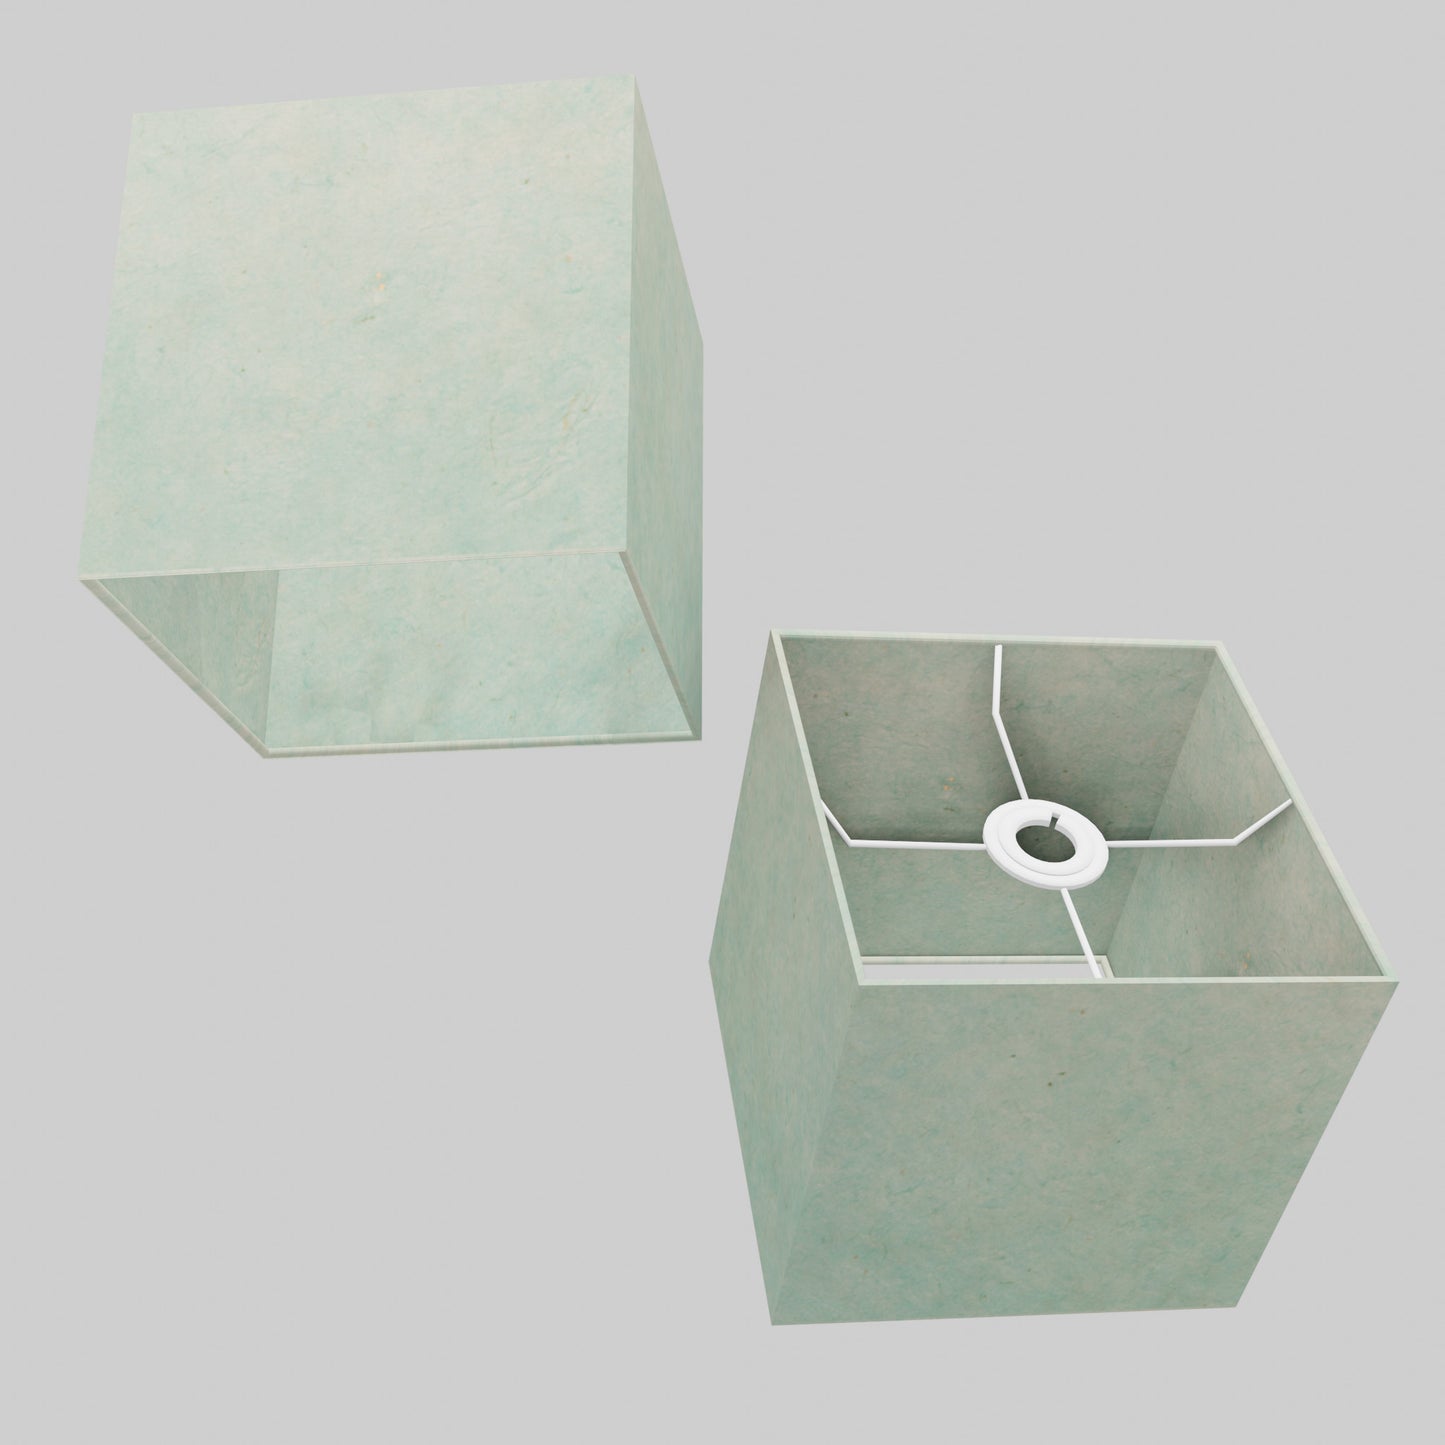 Square Lamp Shade - P65 - Turquoise Lokta, 20cm(w) x 20cm(h) x 20cm(d)